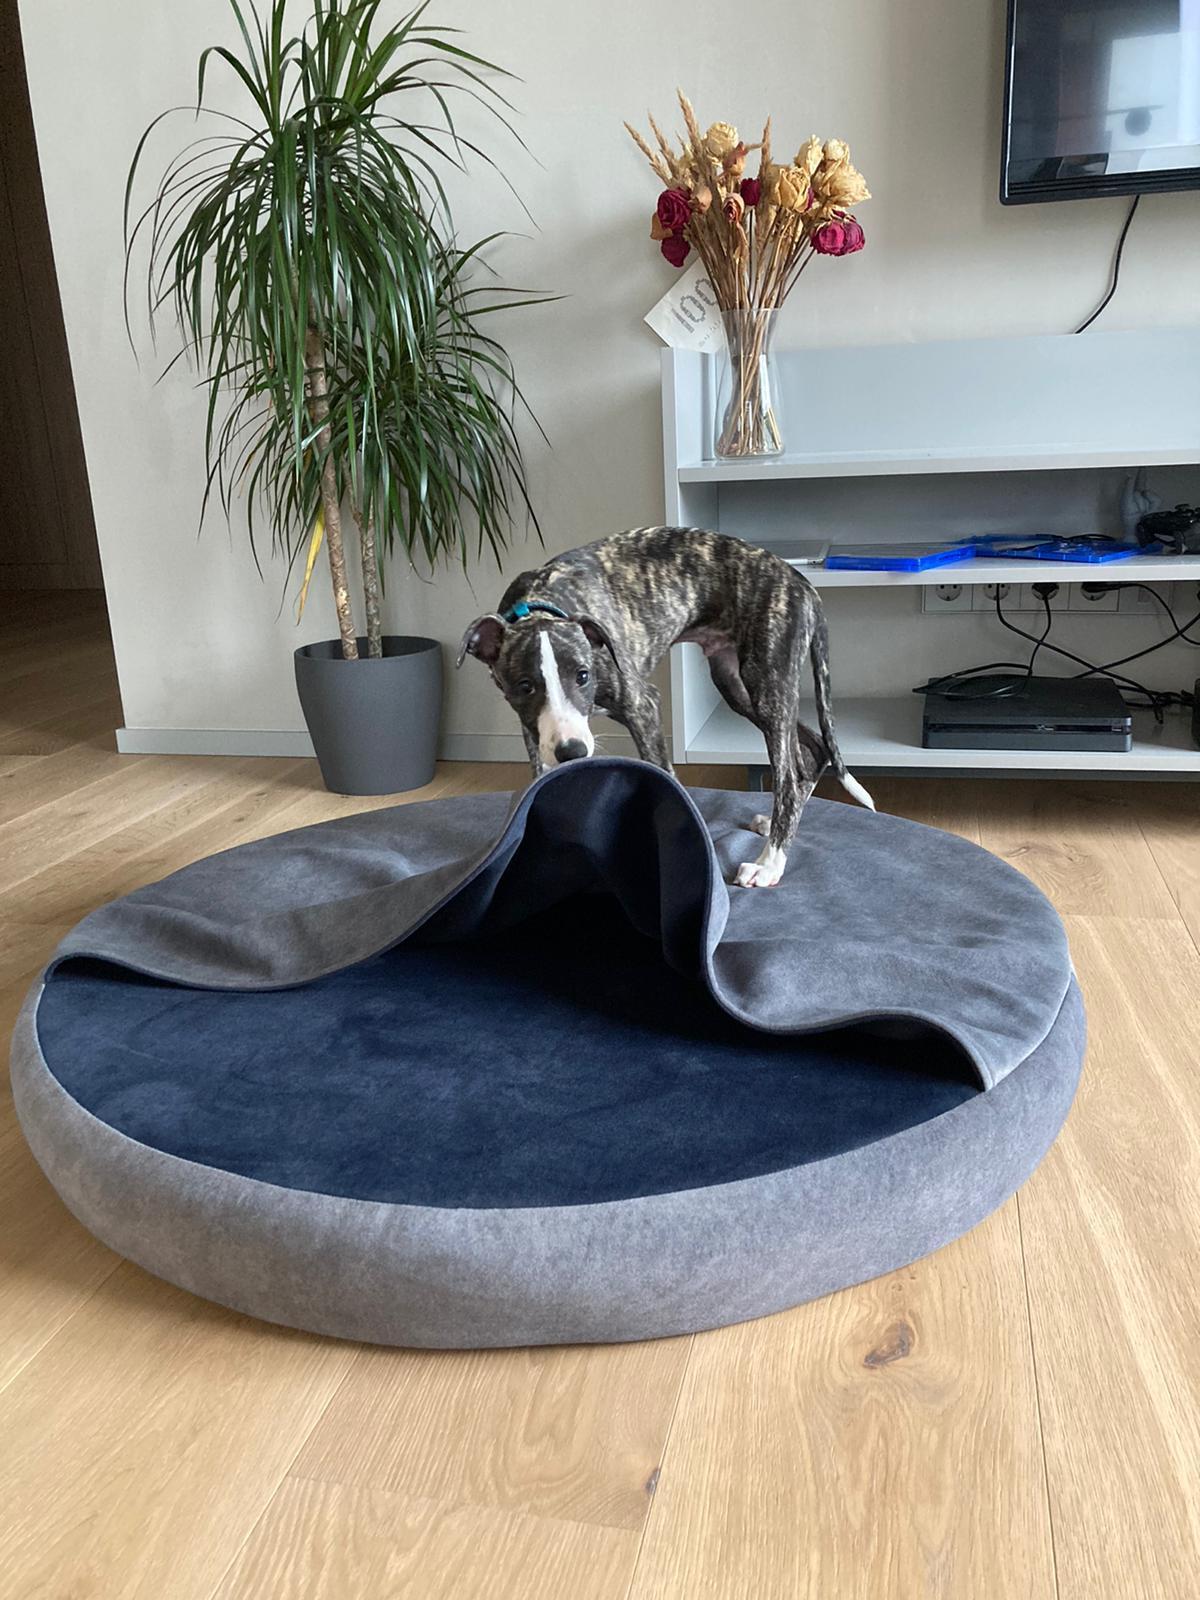 Cozy cave dog bed | STEEL GREY+NAVY BLUE - premium dog goods handmade in Europe by animalistus